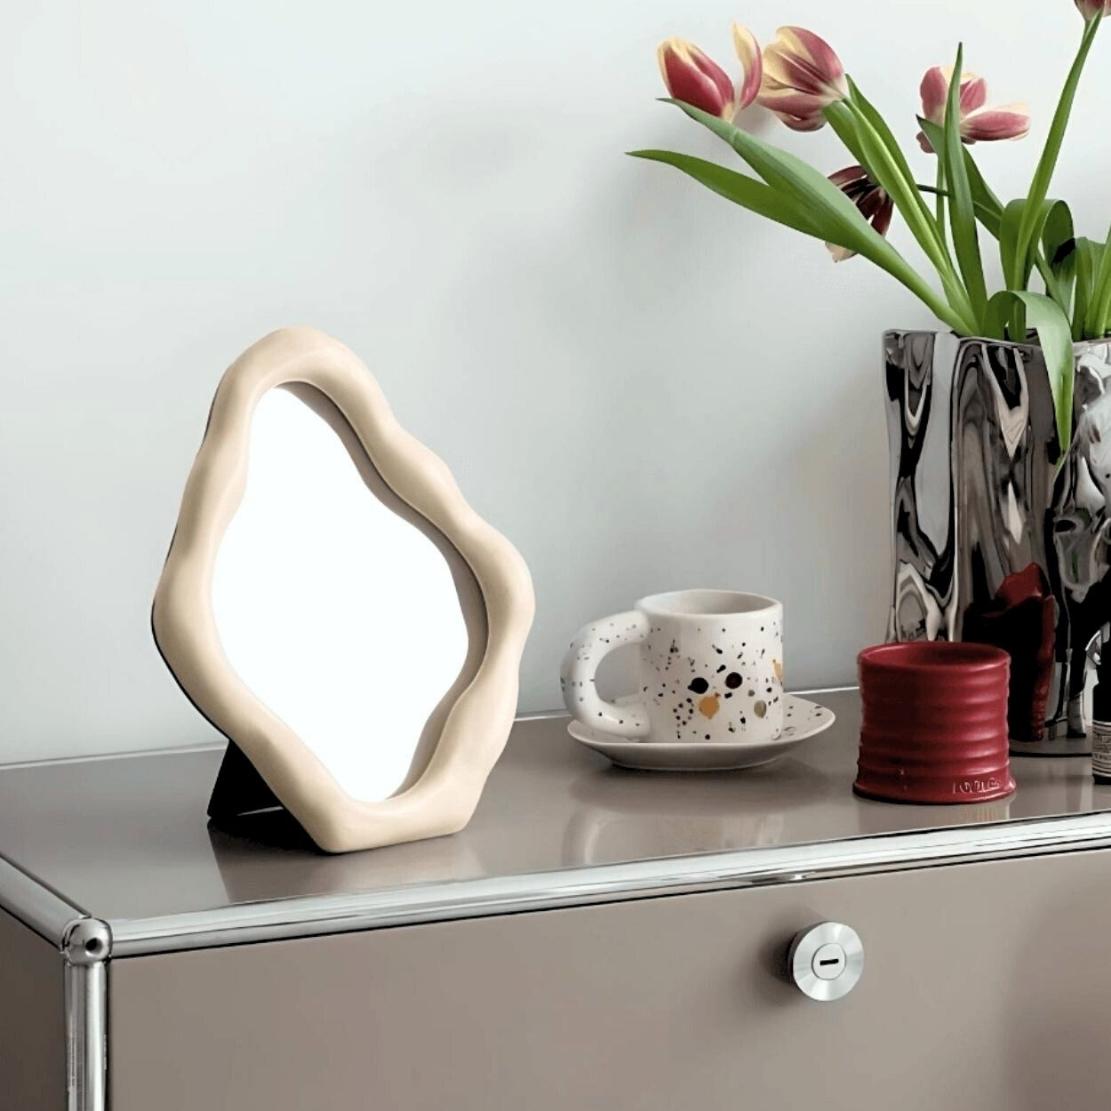 Irregular ceramic beige frame decorative table mirror